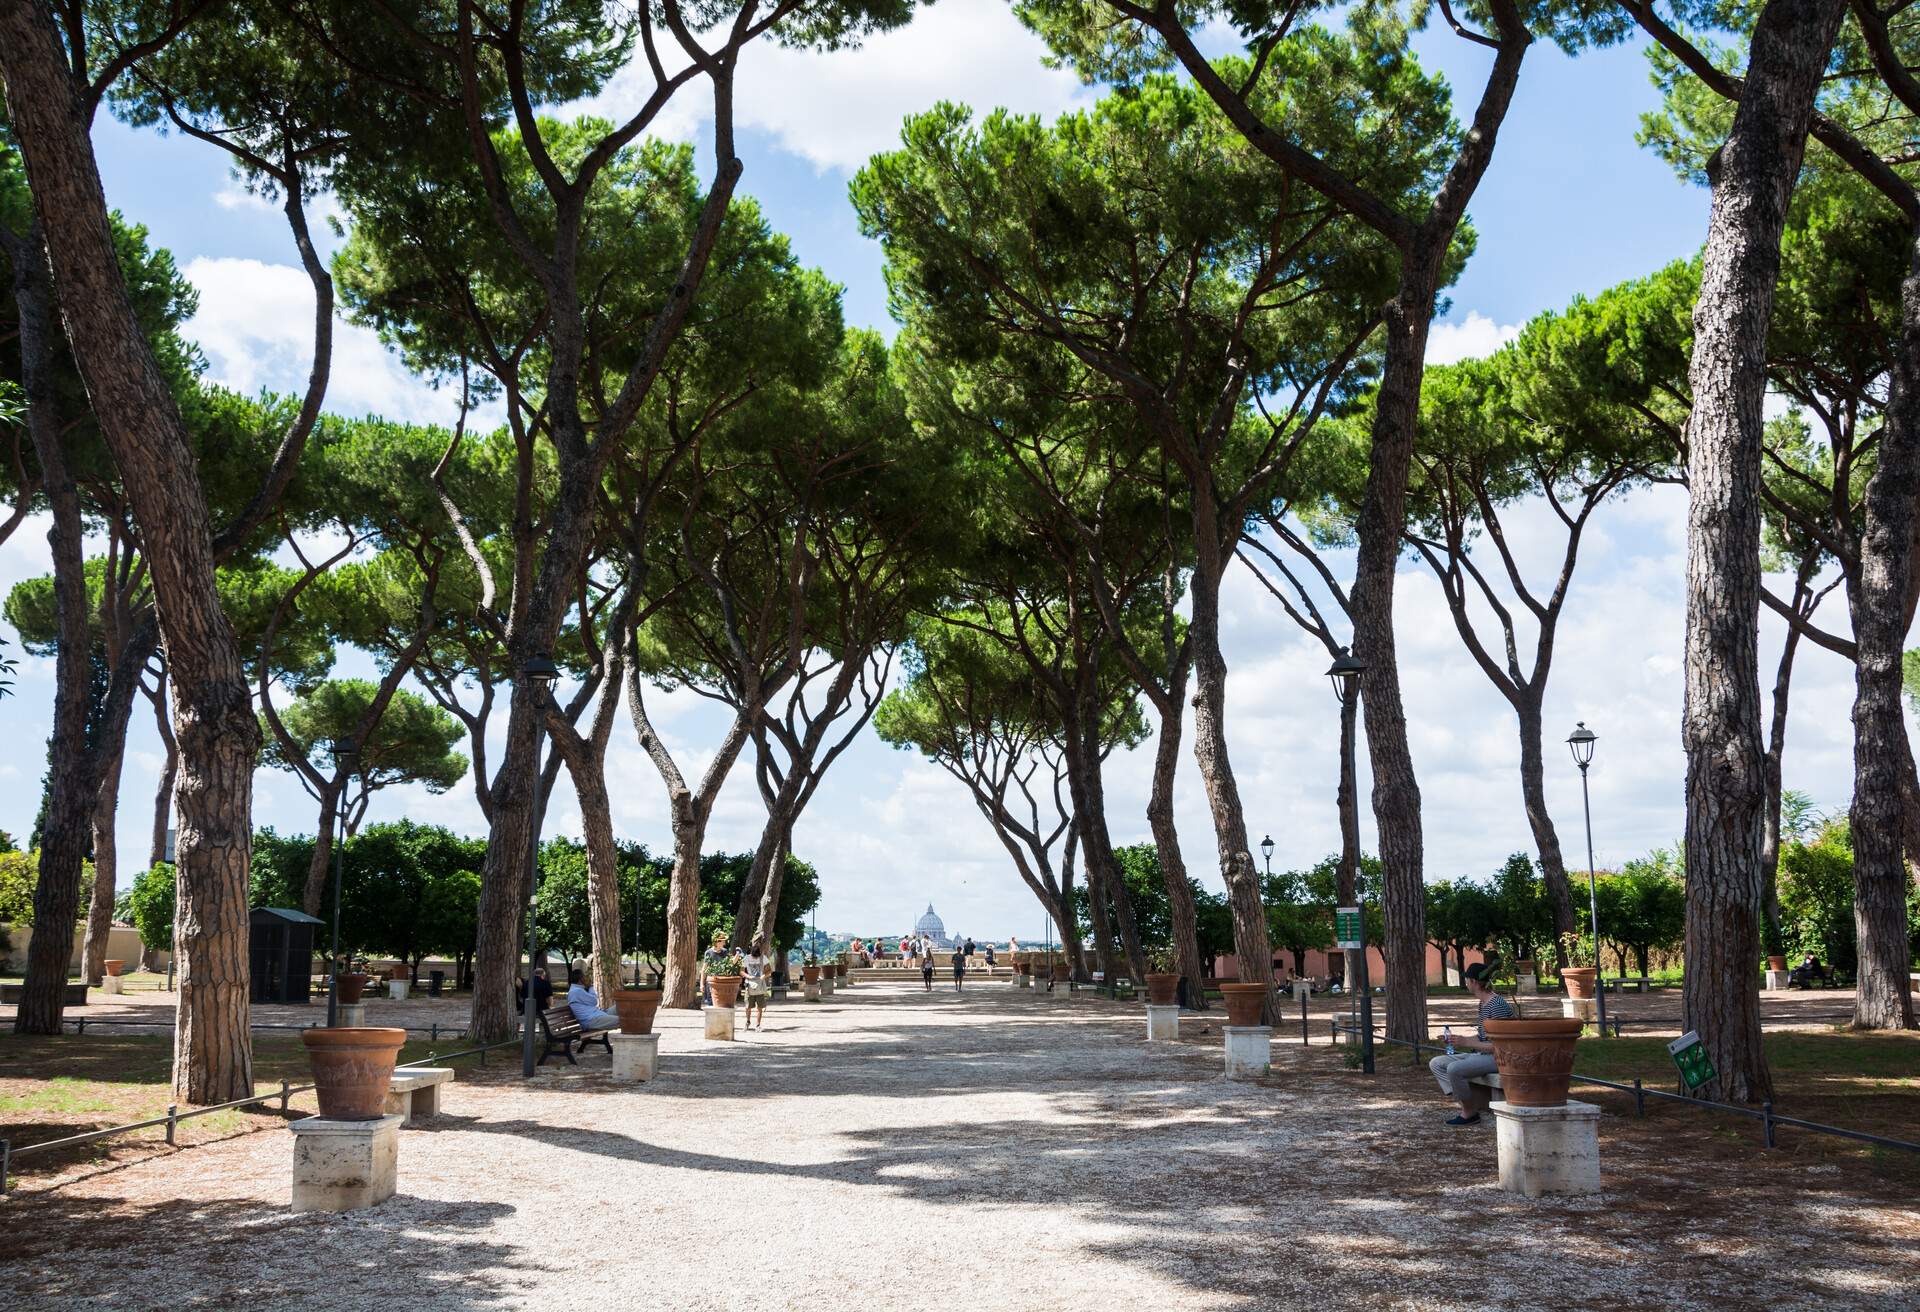 View from the gardens near Santa Sabina church in Rome